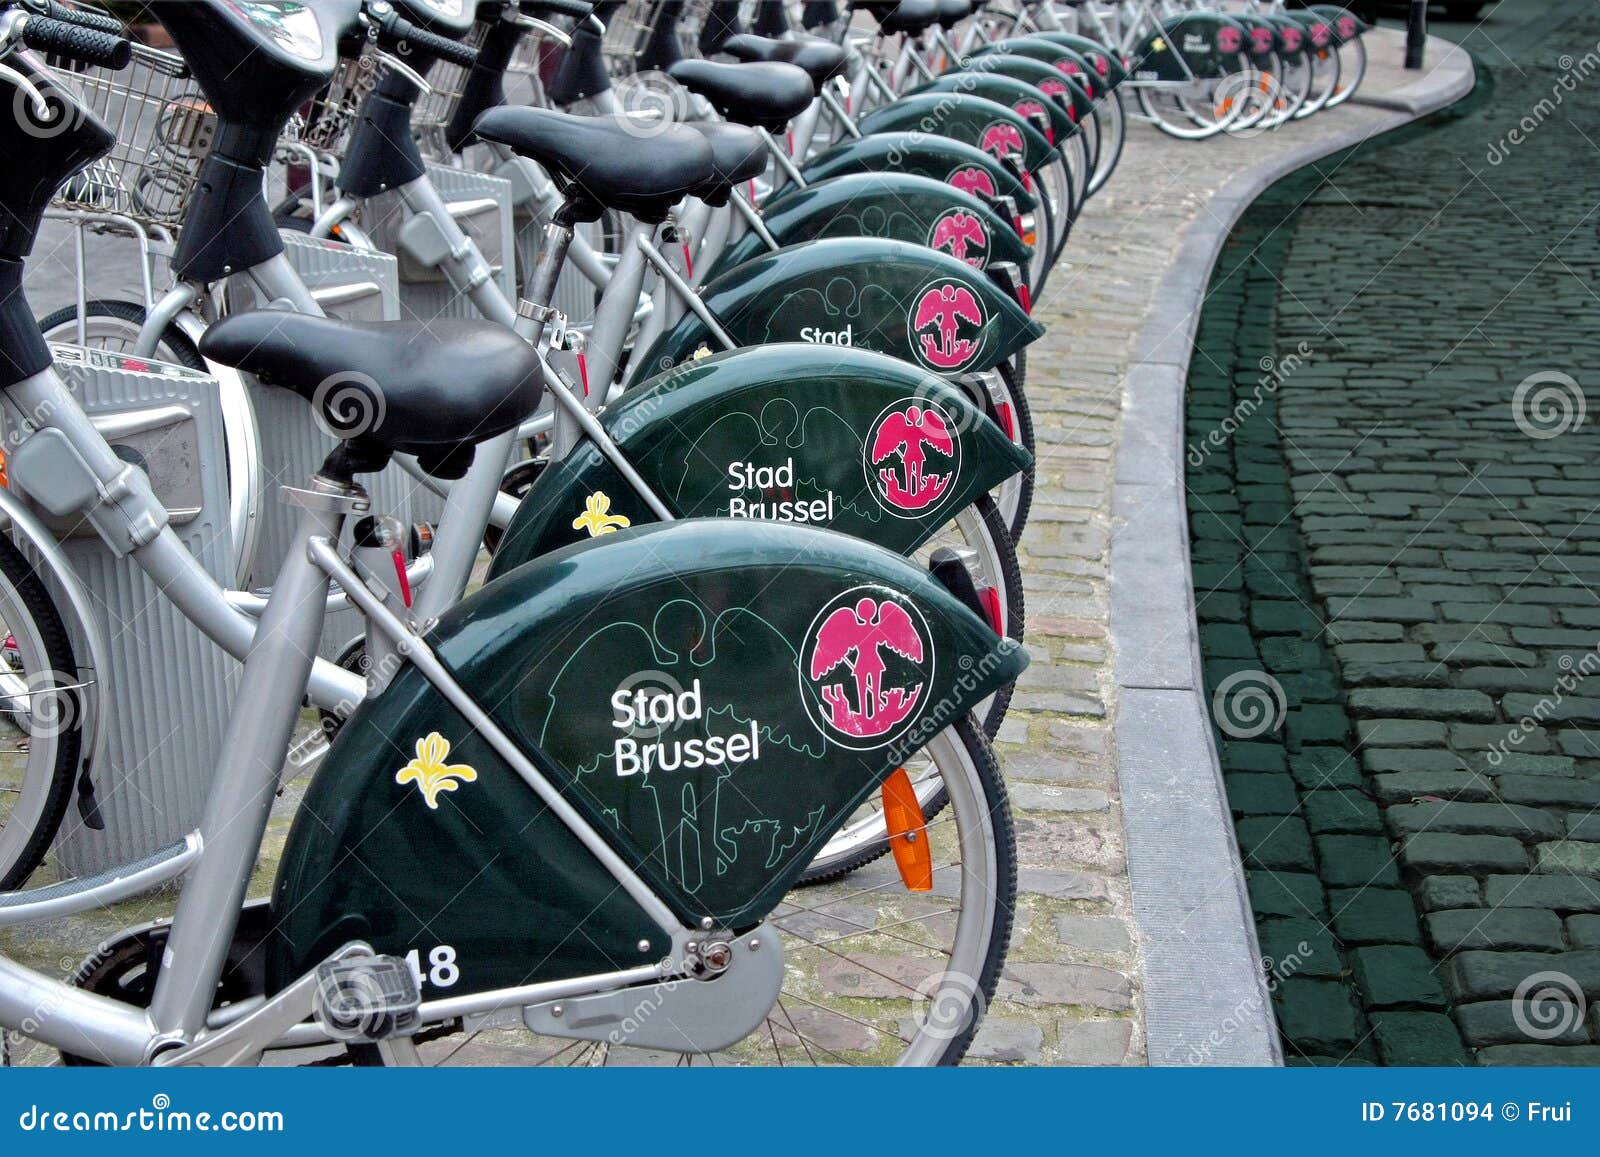 public bicycles